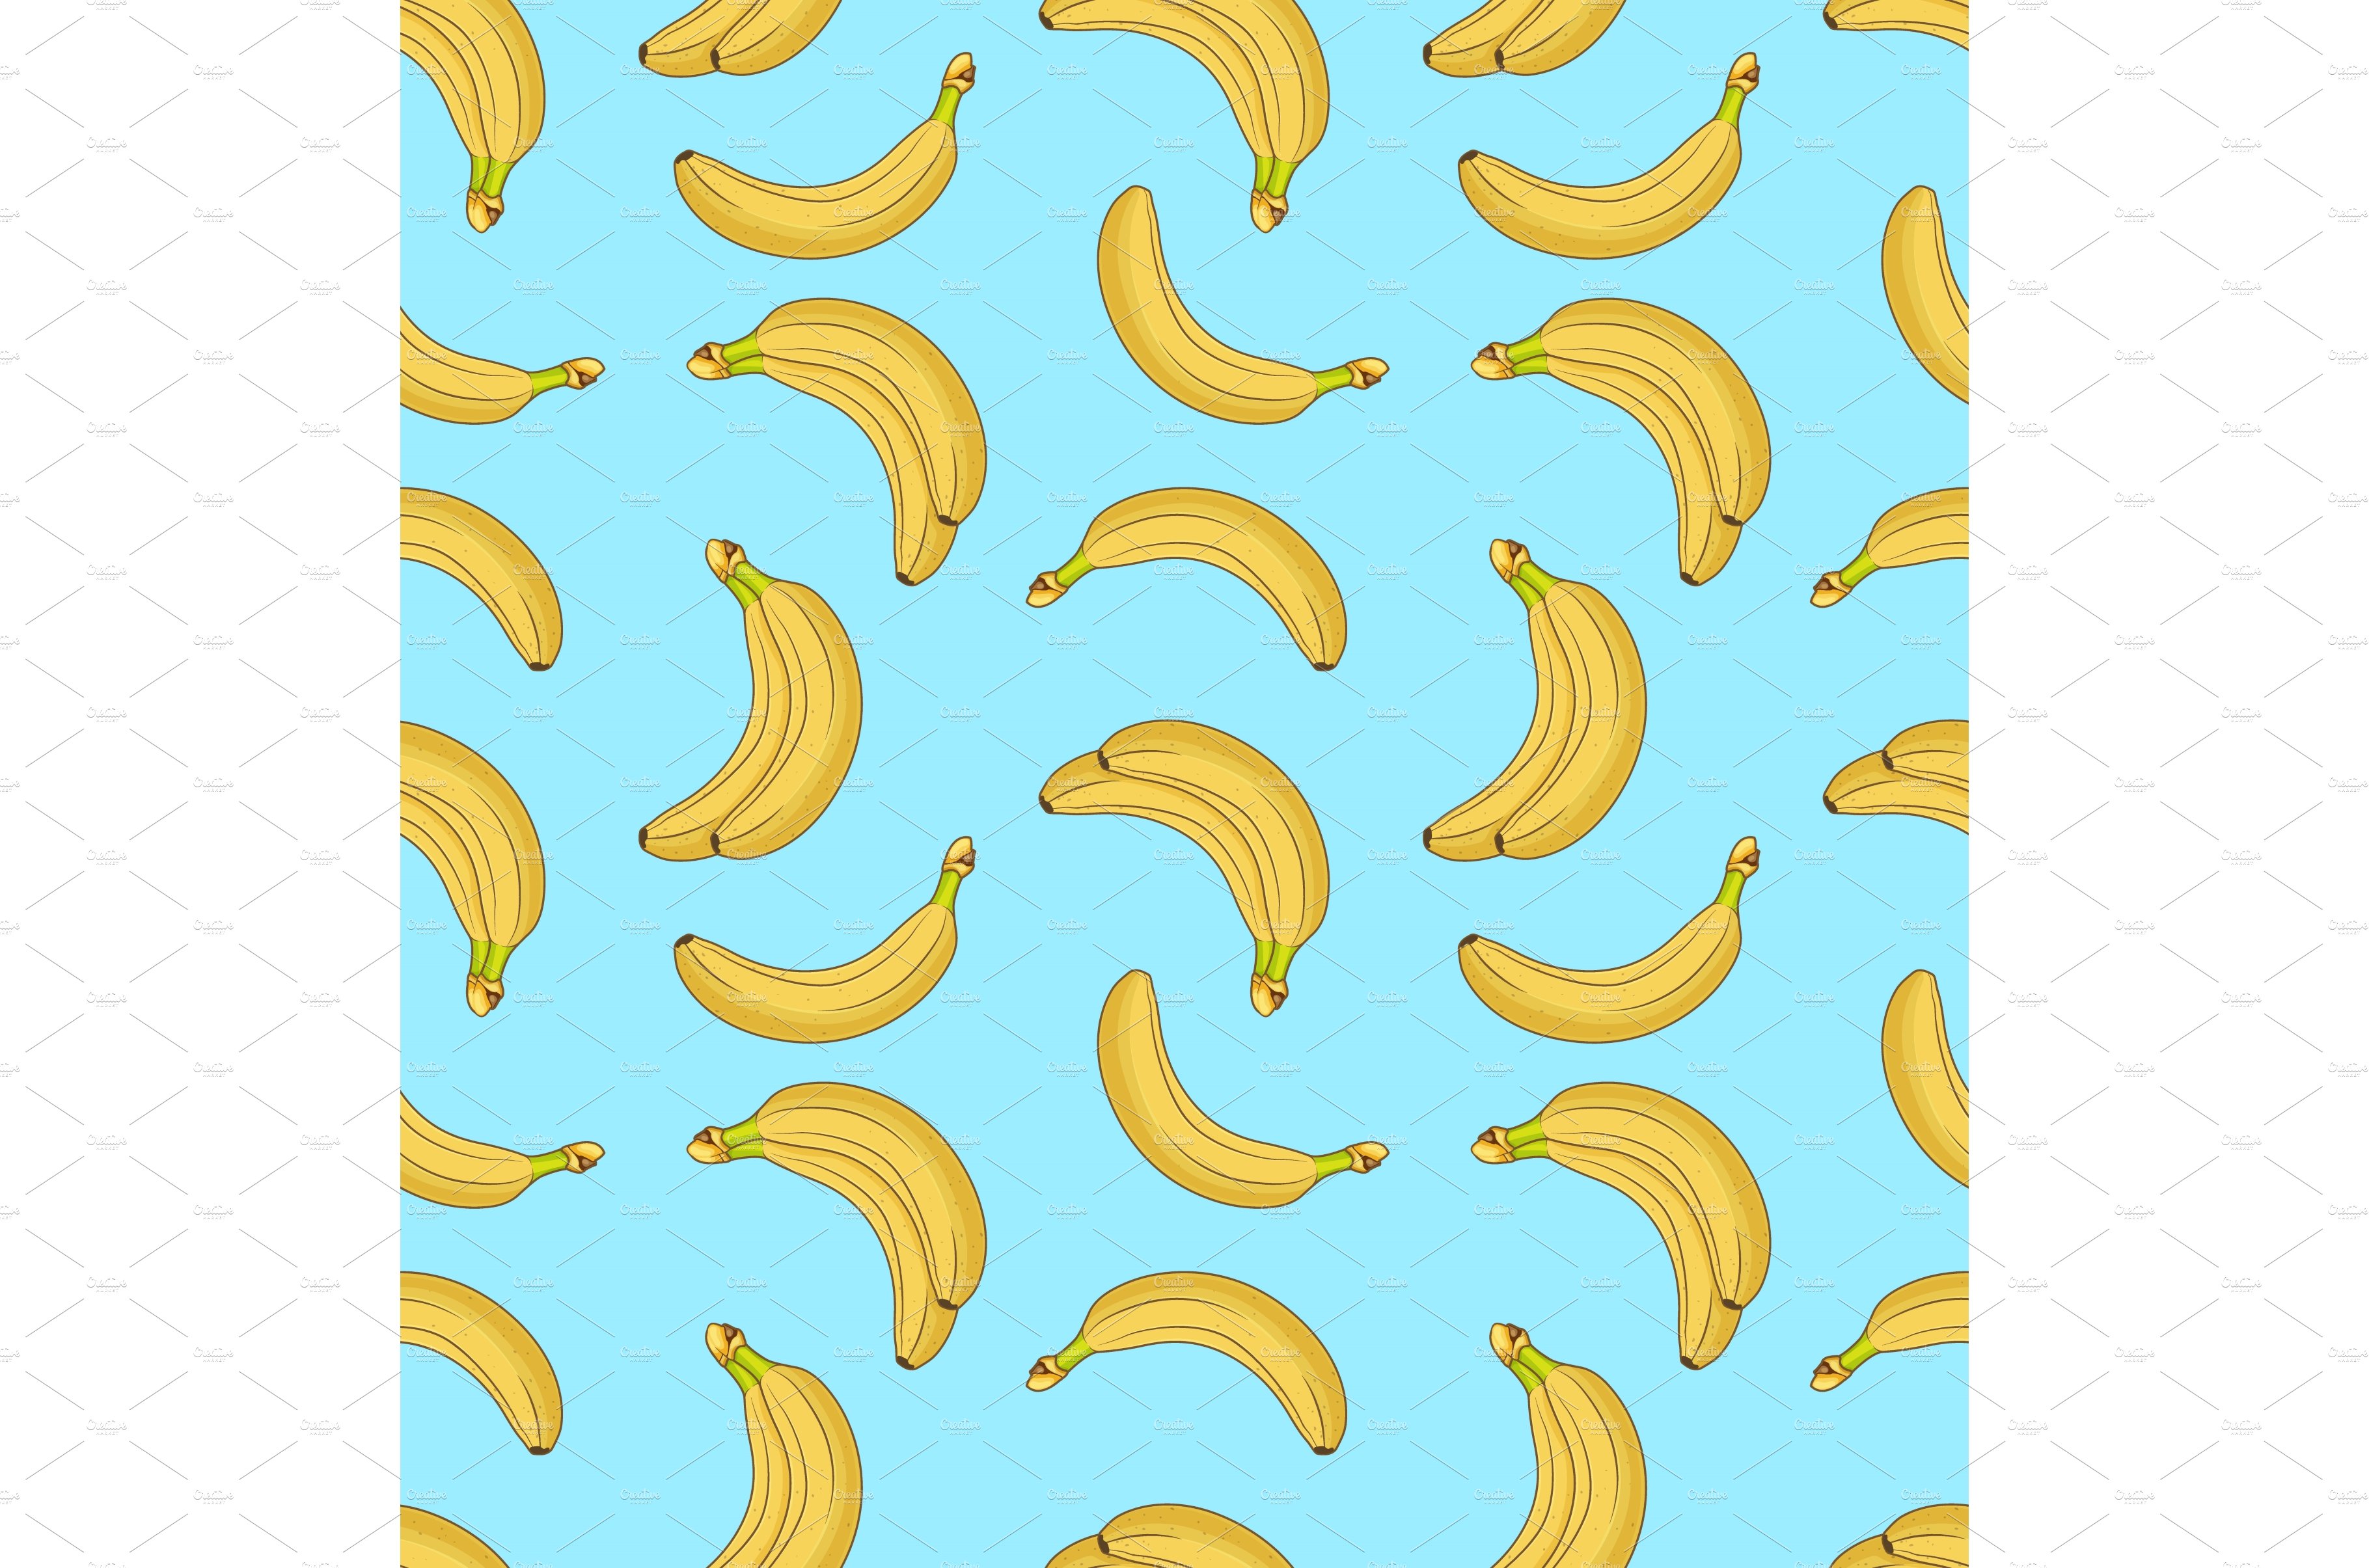 Sweet fruit yellow bananas seamless cover image.